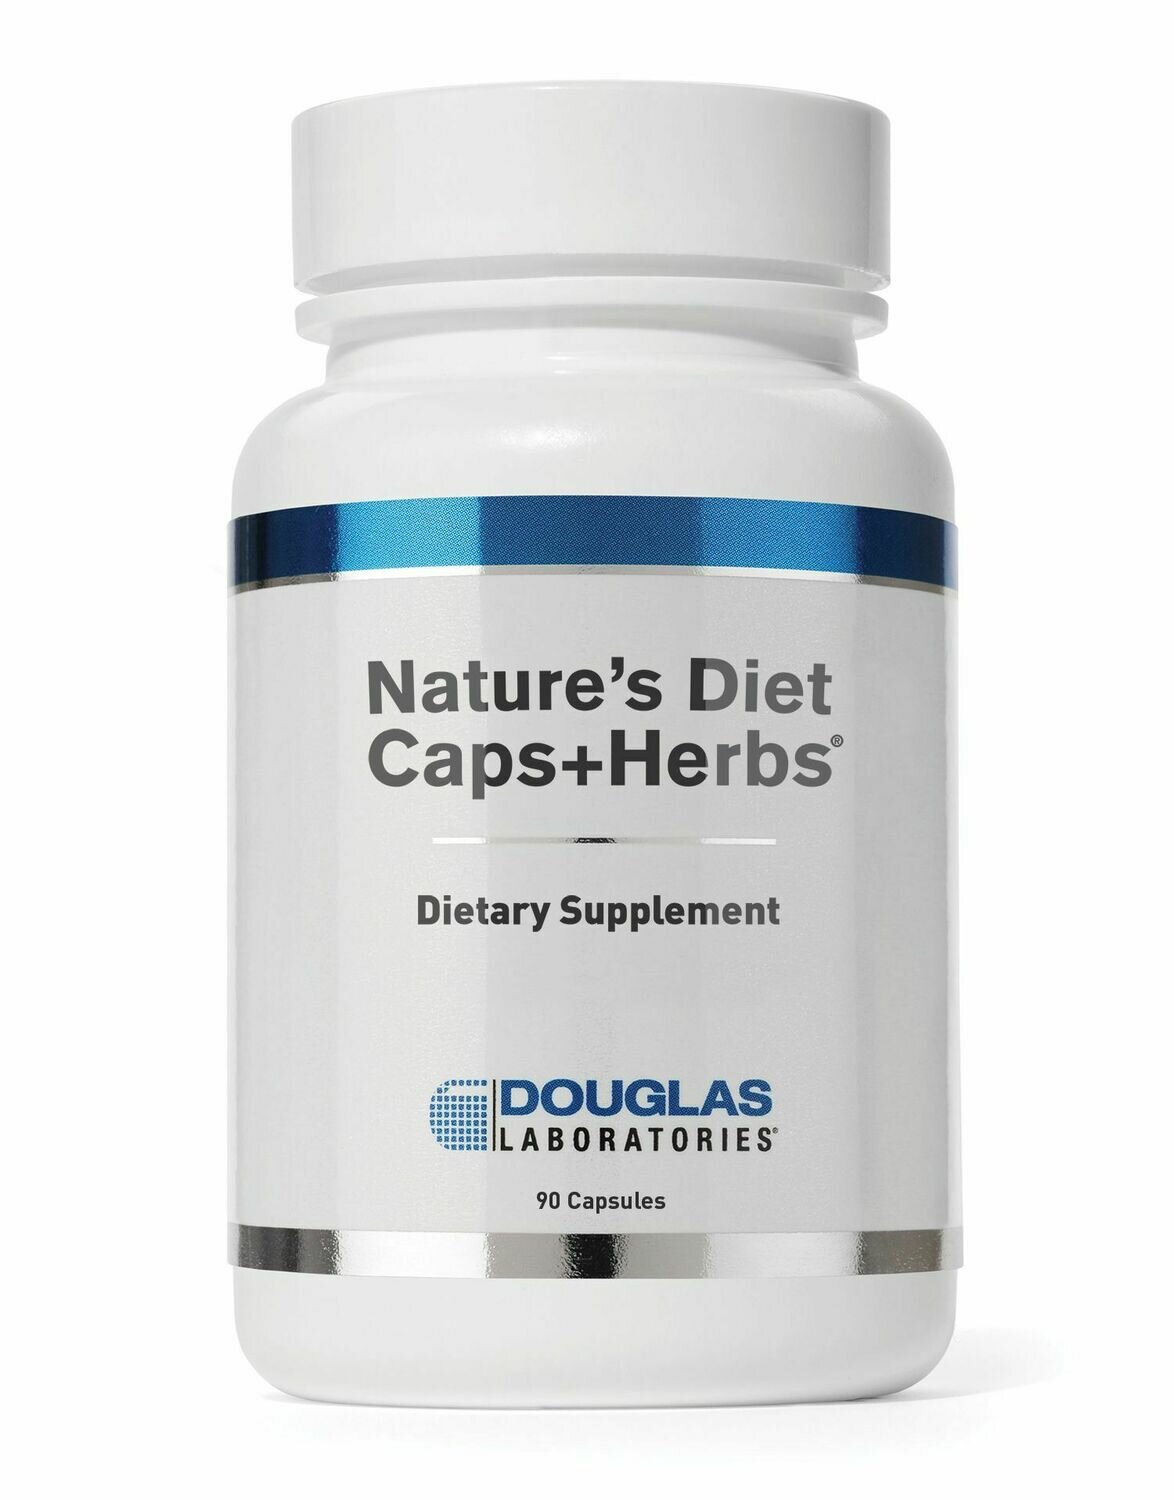 Nature's Diet Caps+Herbs